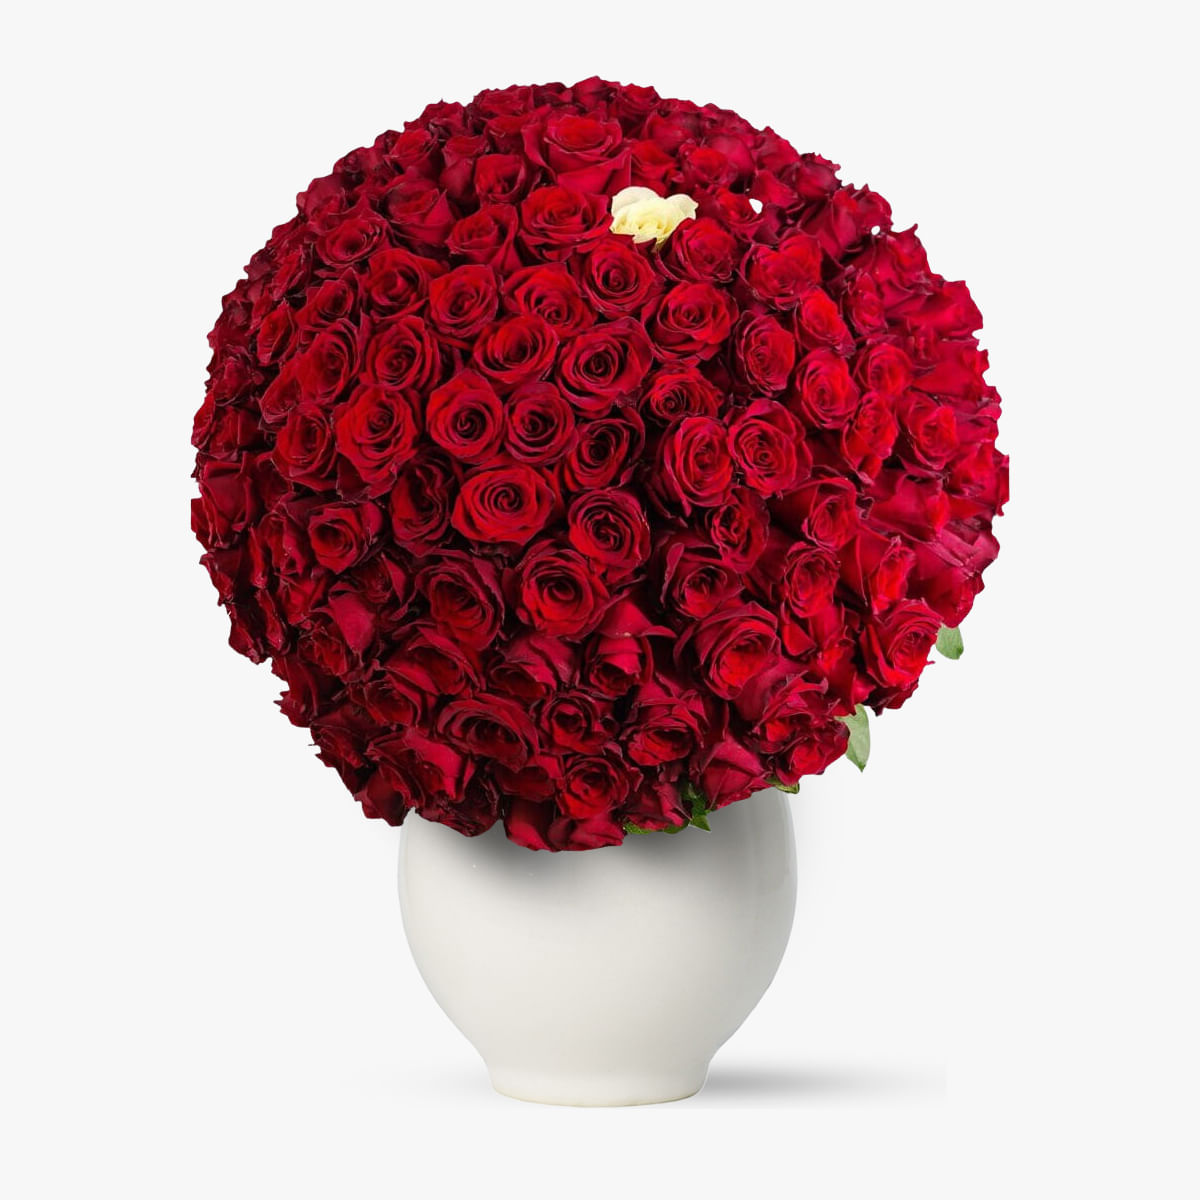 Buchet 229 trandafiri rosii - Dragoste fara limite extraordinar si grandios